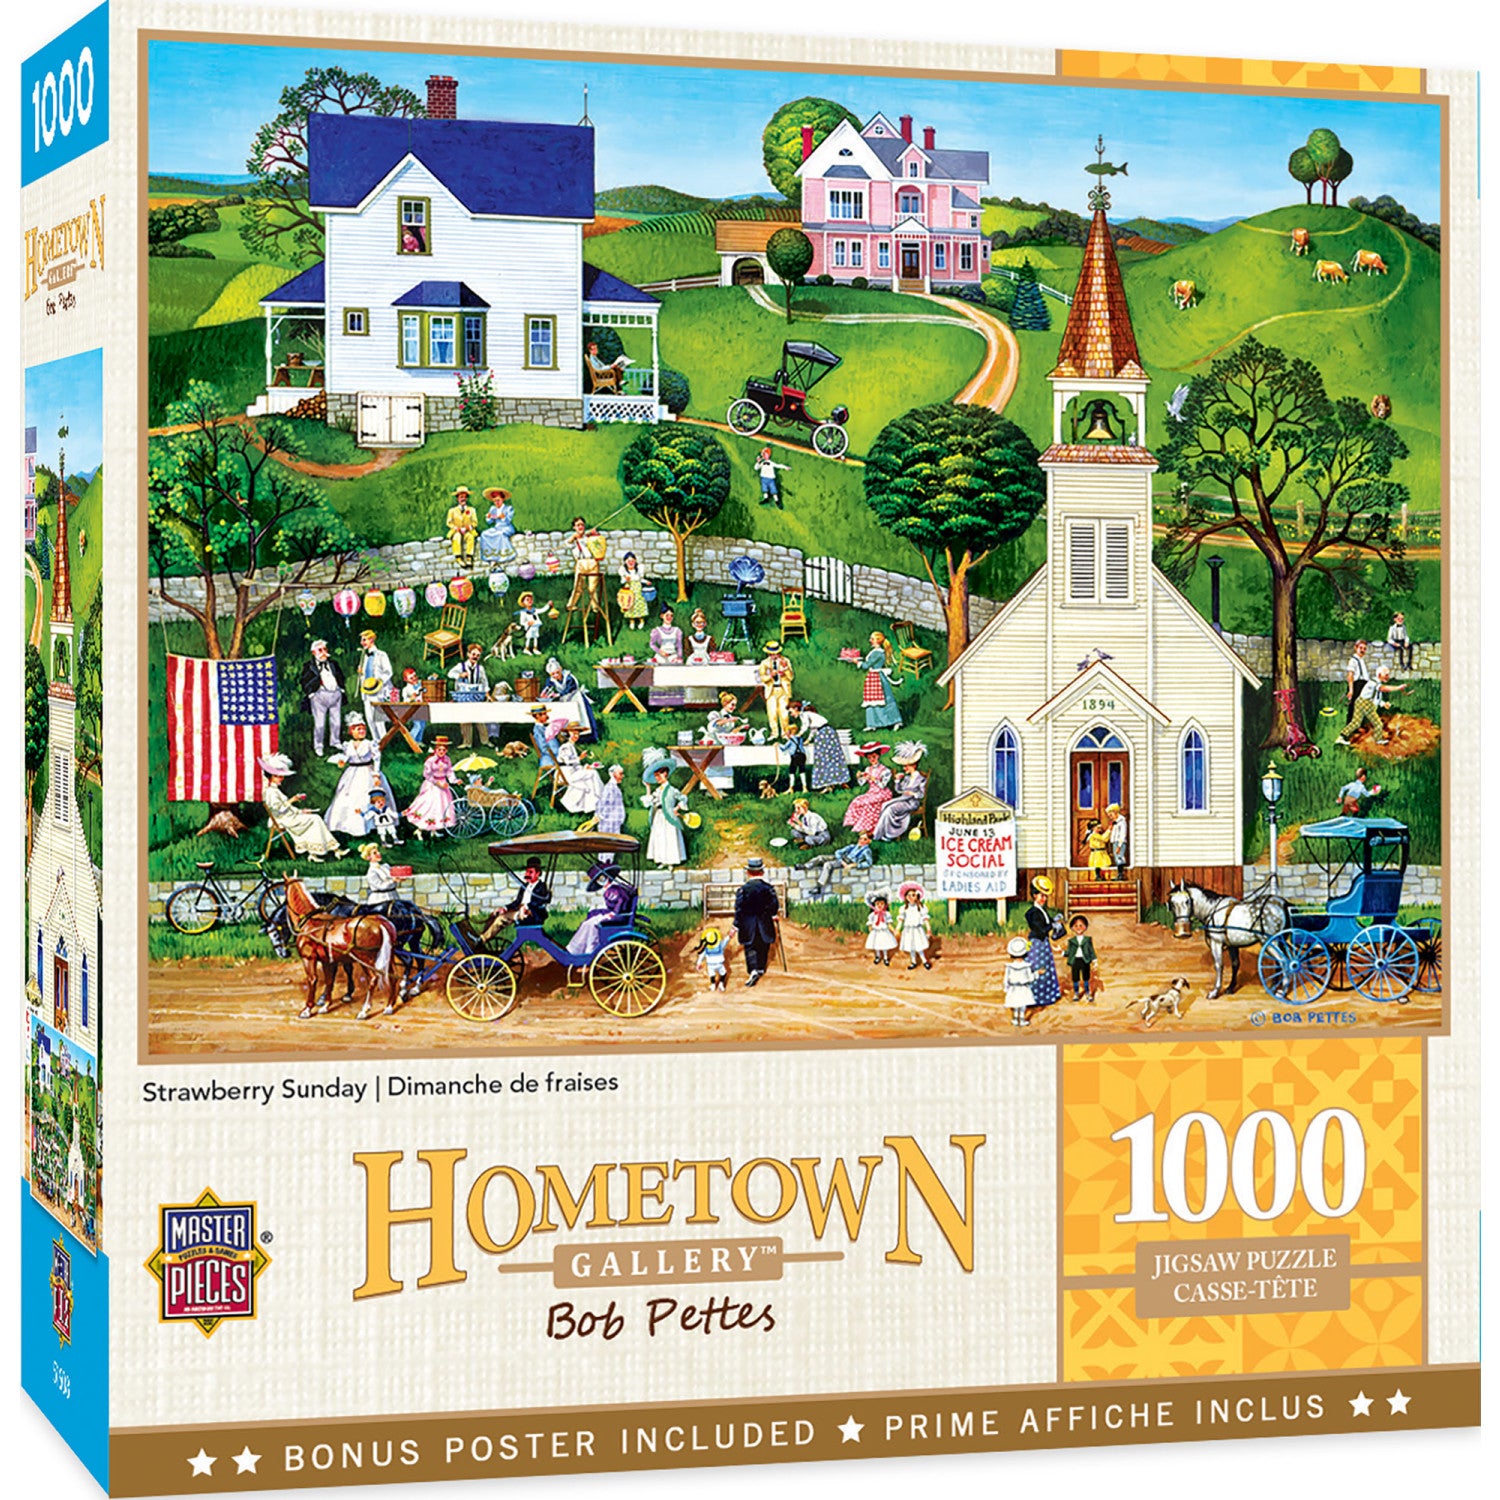 Hometown Gallery - Strawberry Sunday 1000 Piece Jigsaw Puzzle